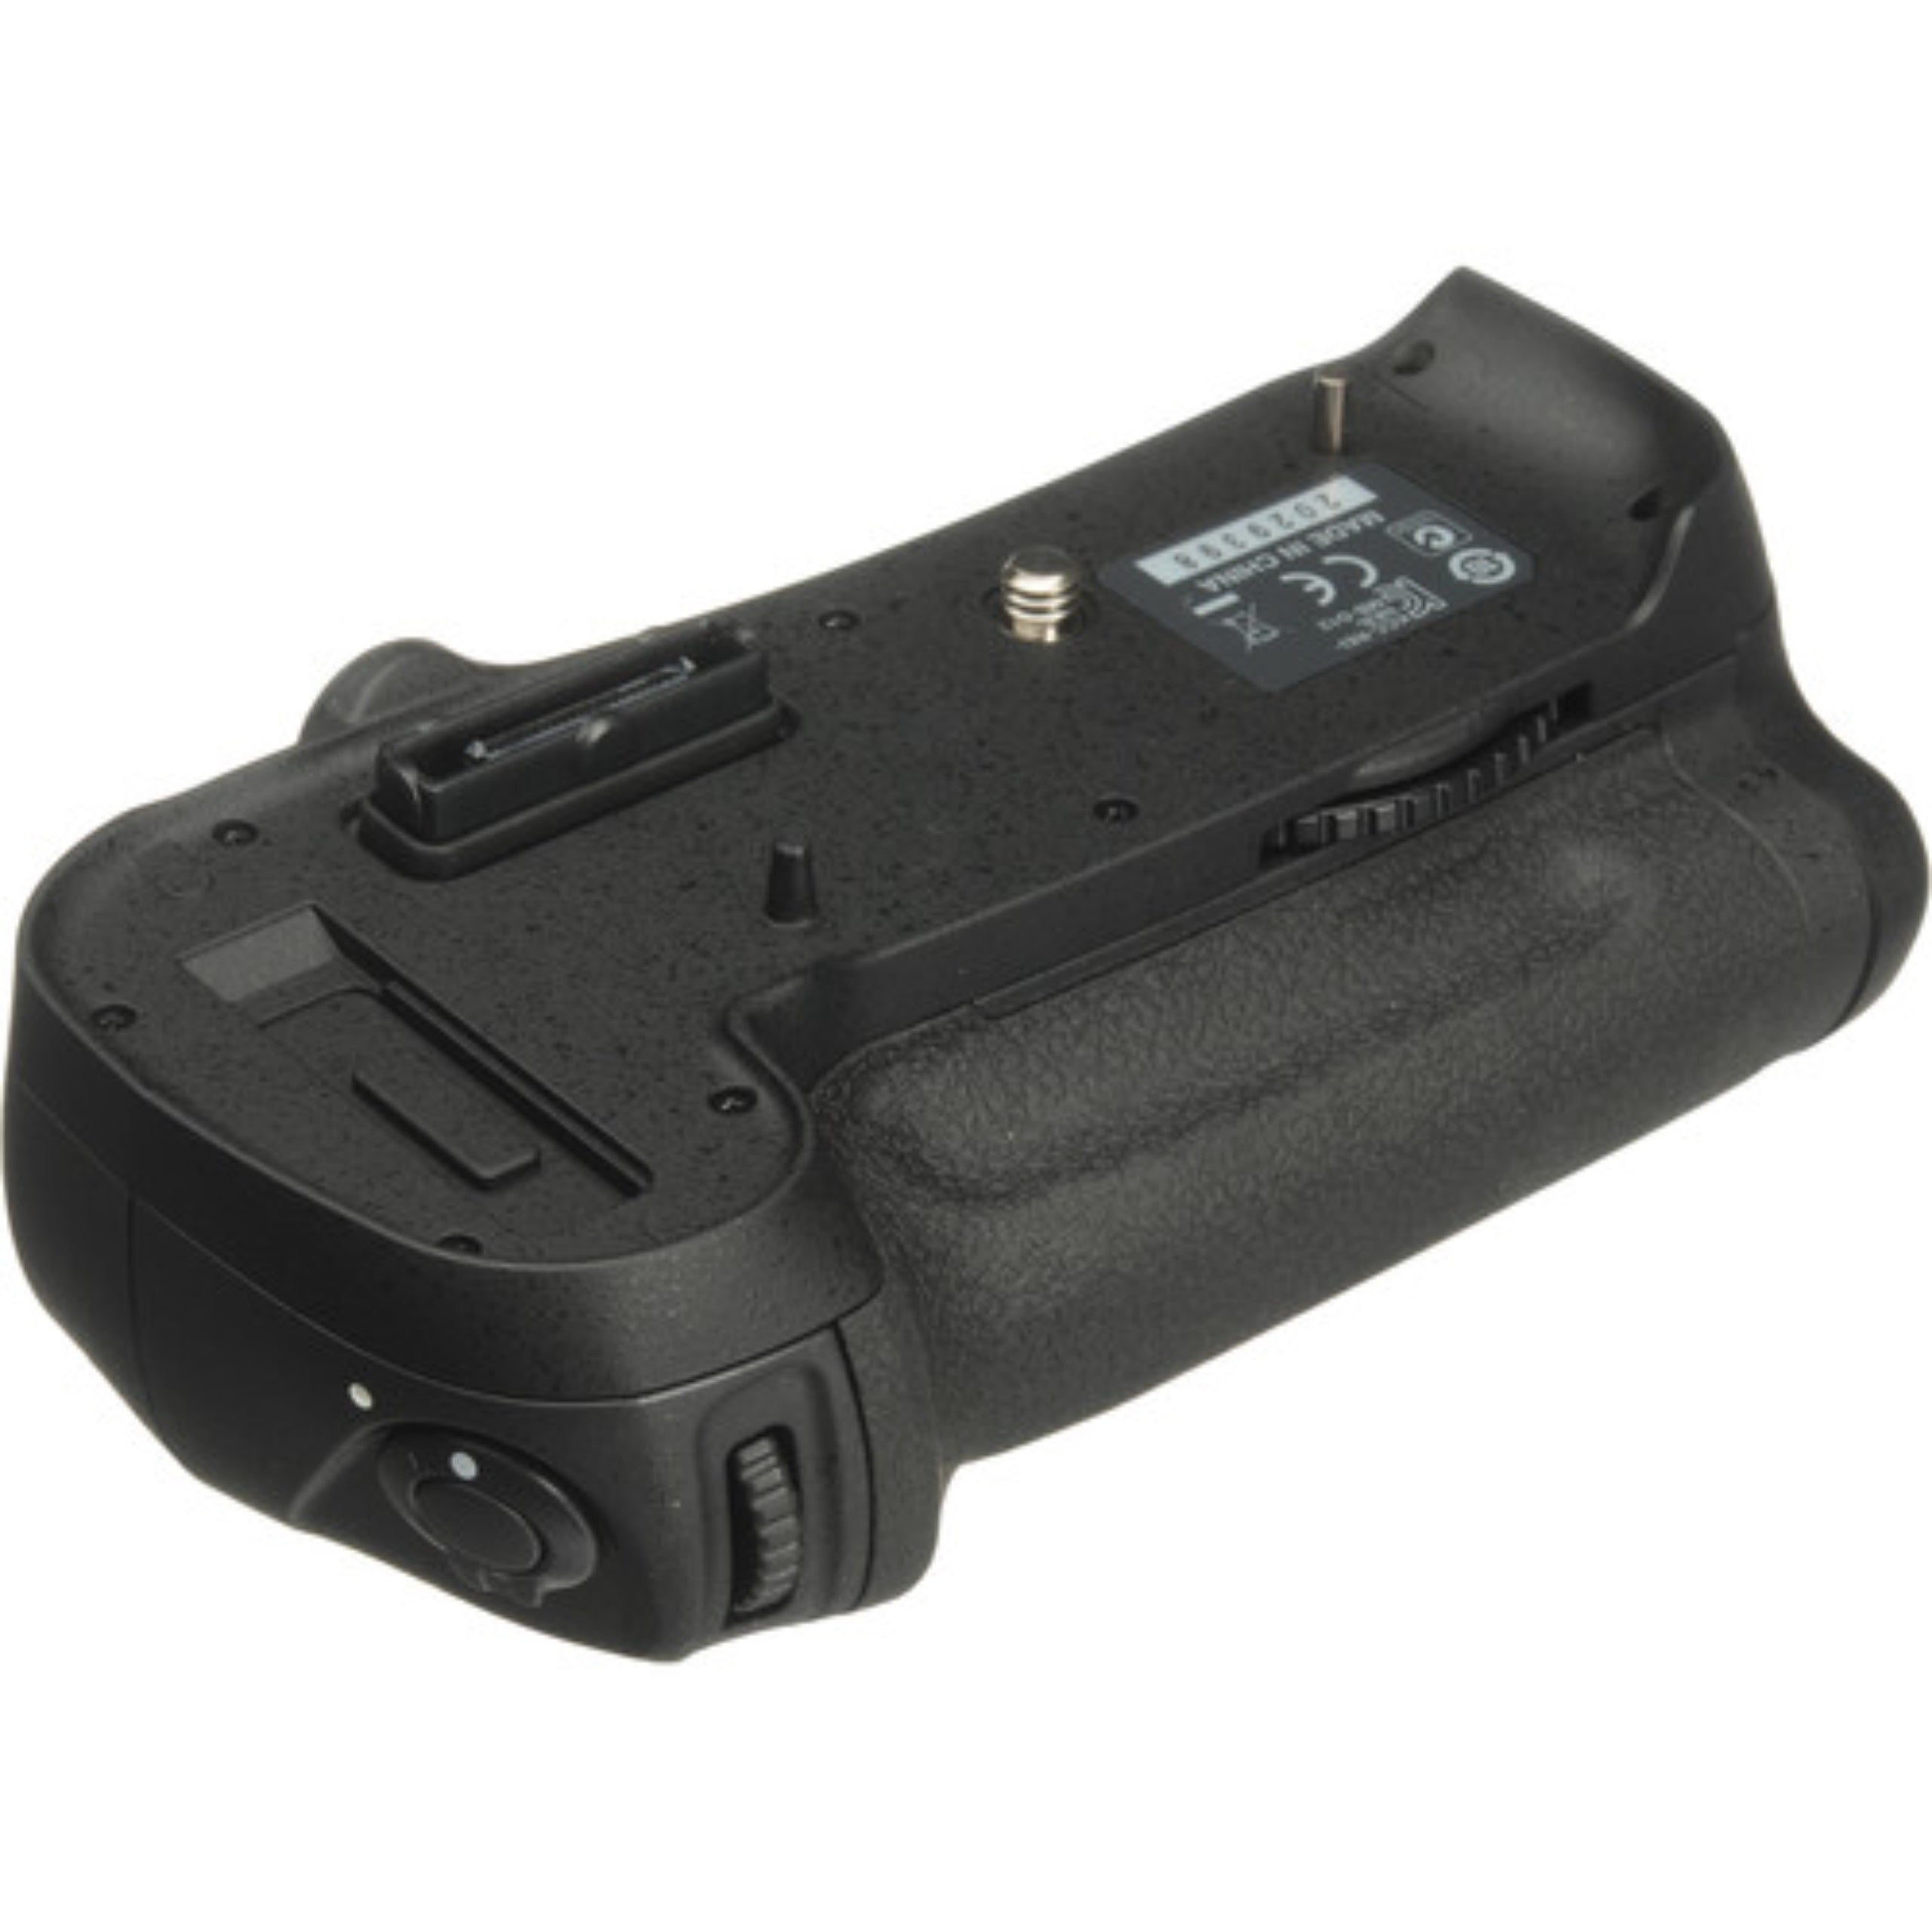 Nikon MB-D12 Multi Power Battery Pack for D800 Camera 27040